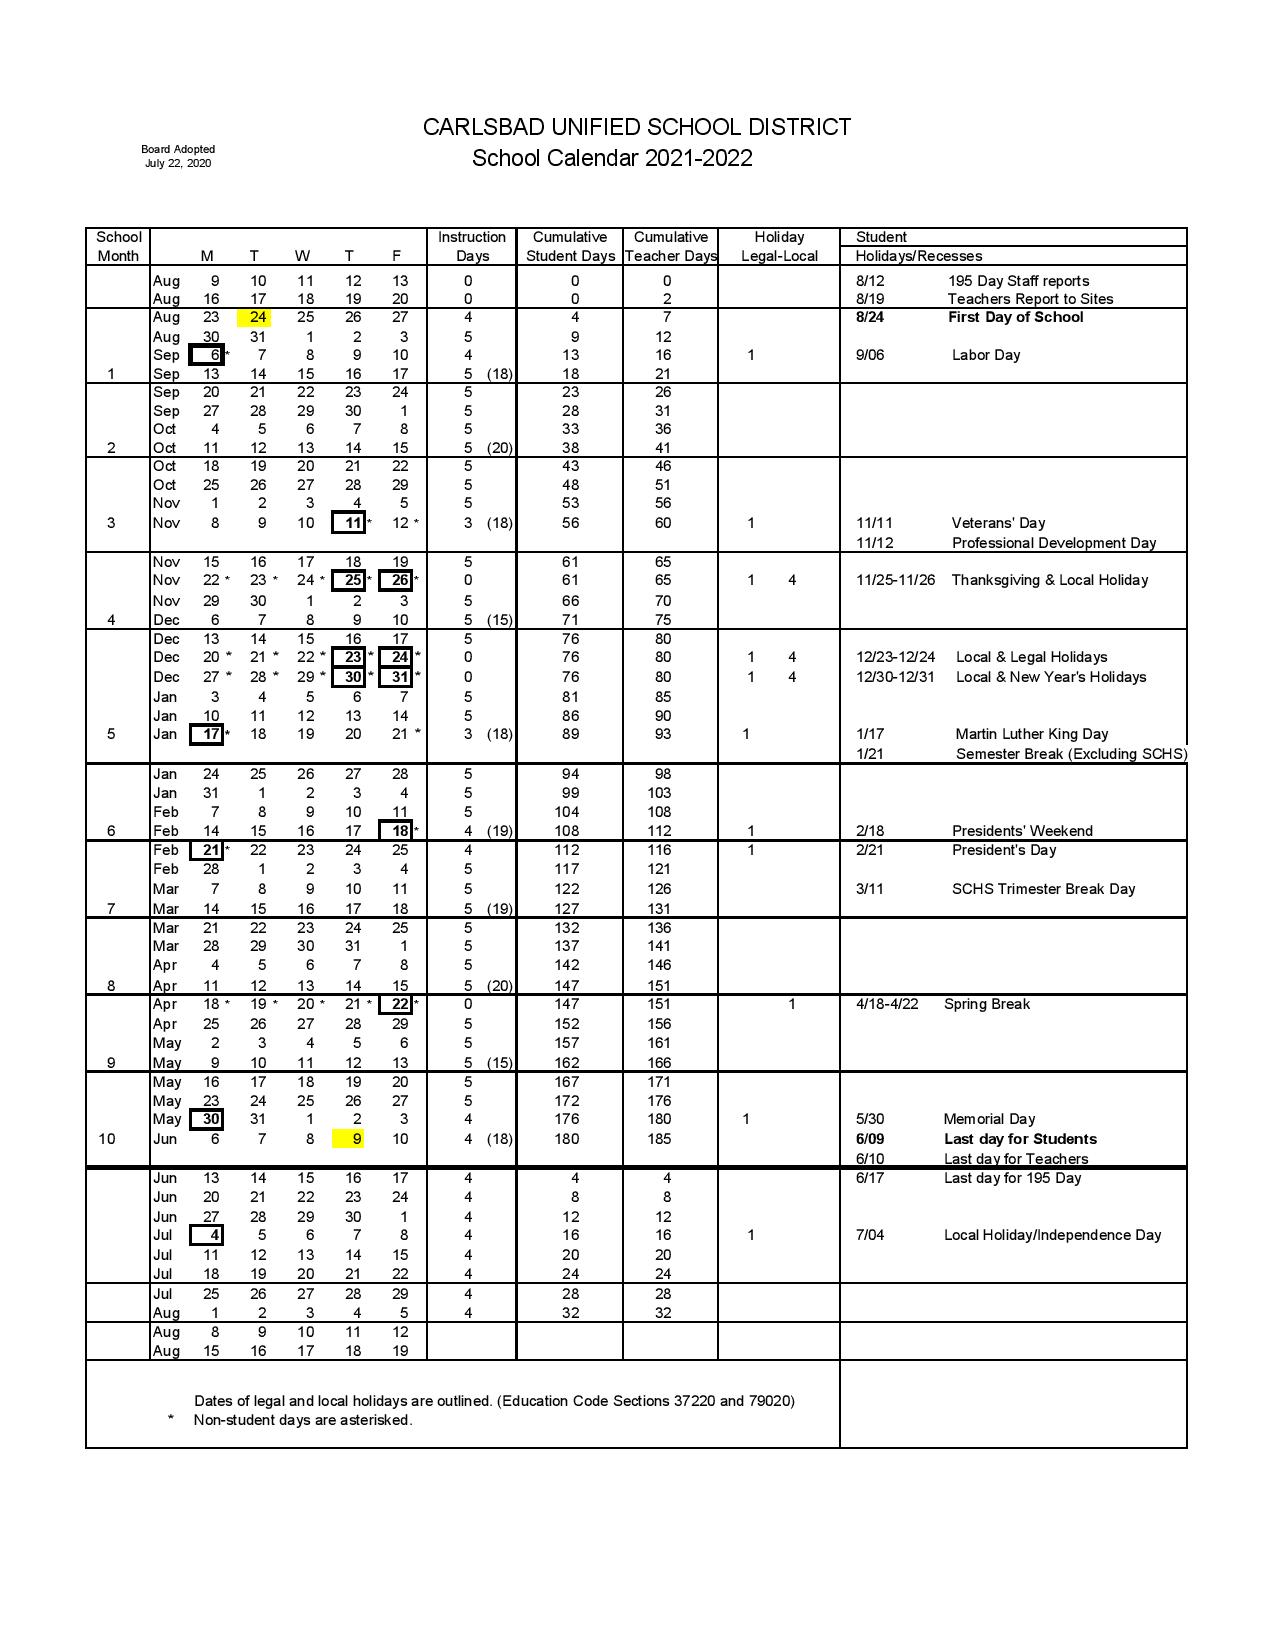 carlsbad-unified-school-district-calendar-2021-2022